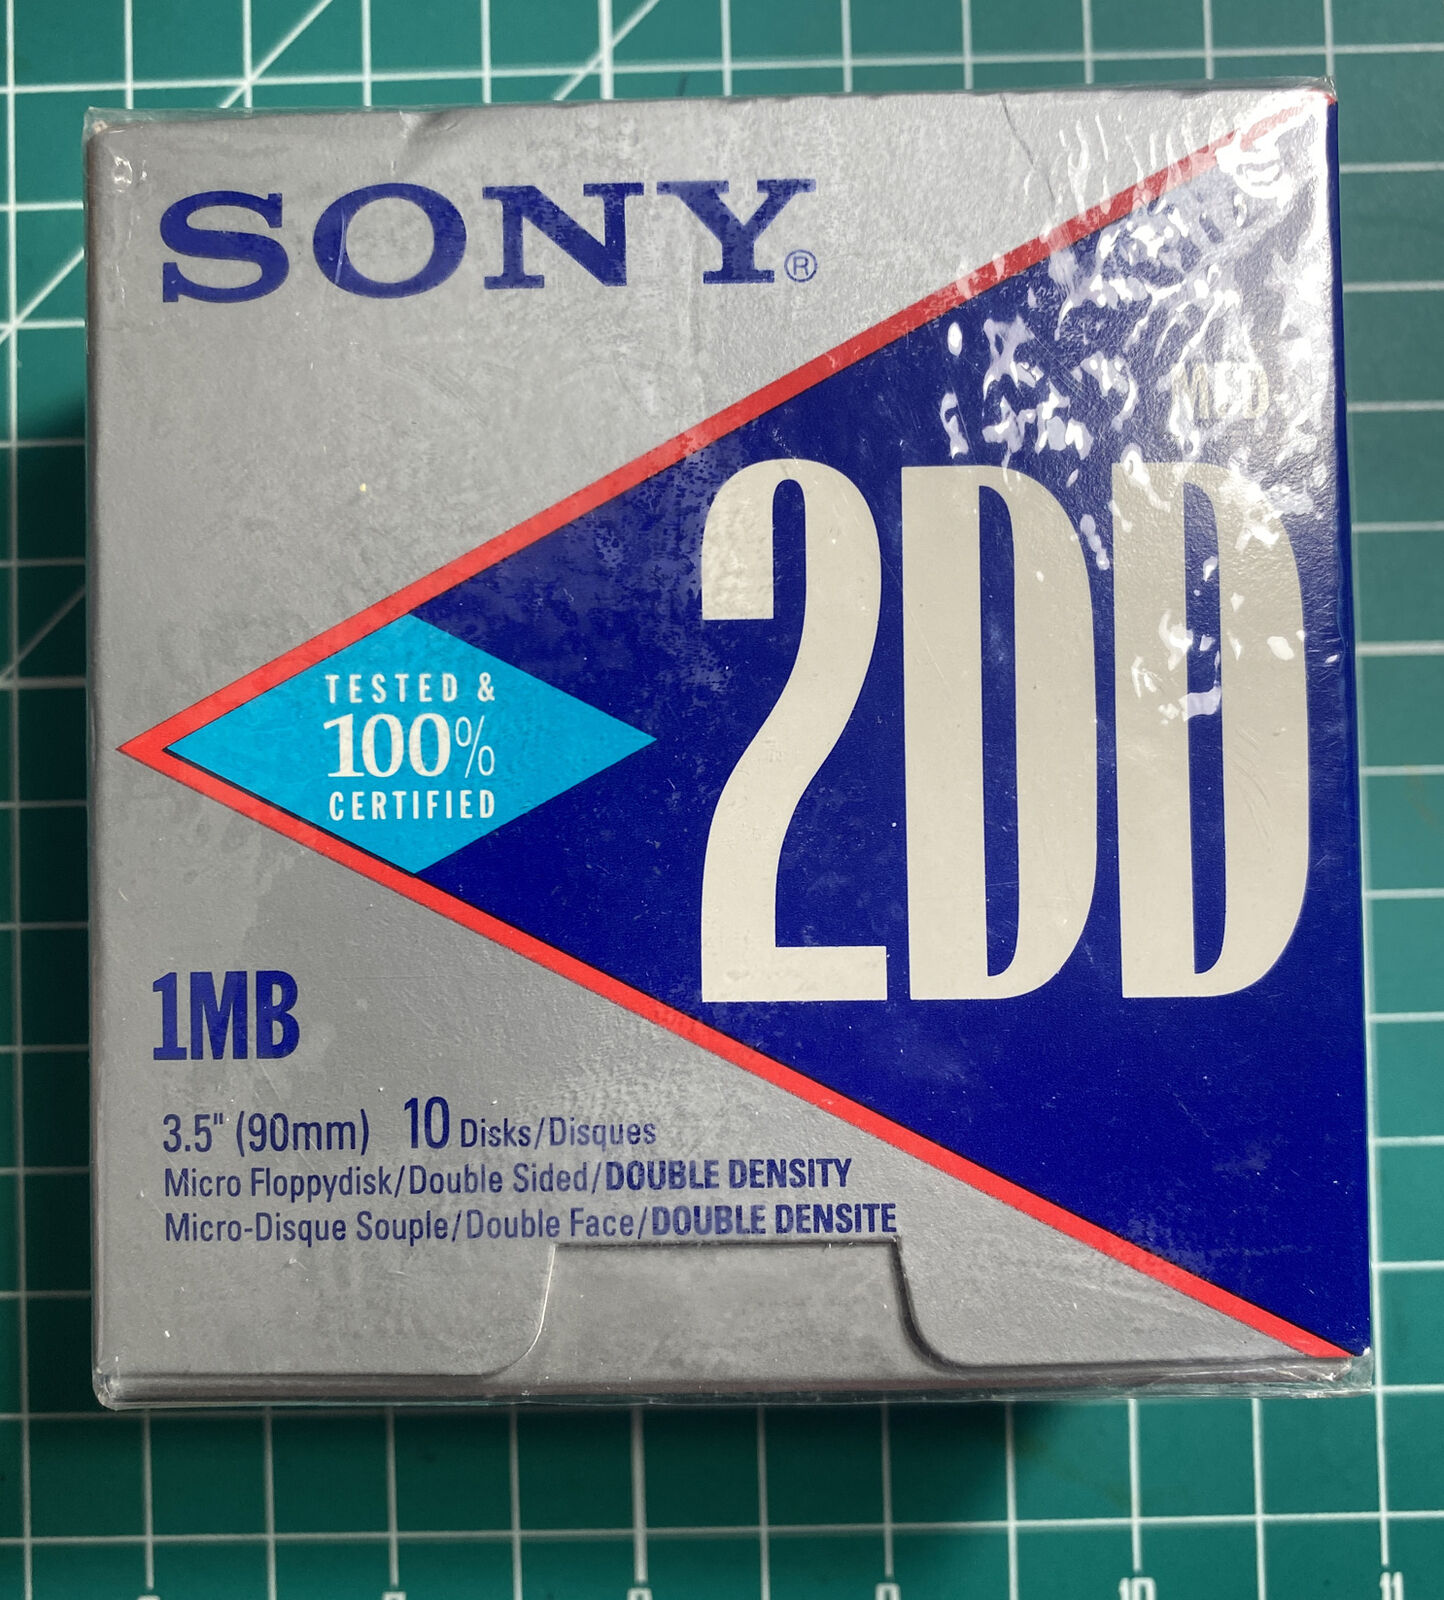 Sony MFD-2DD 1MB 3.5 Double Density Micro Floppy Disk